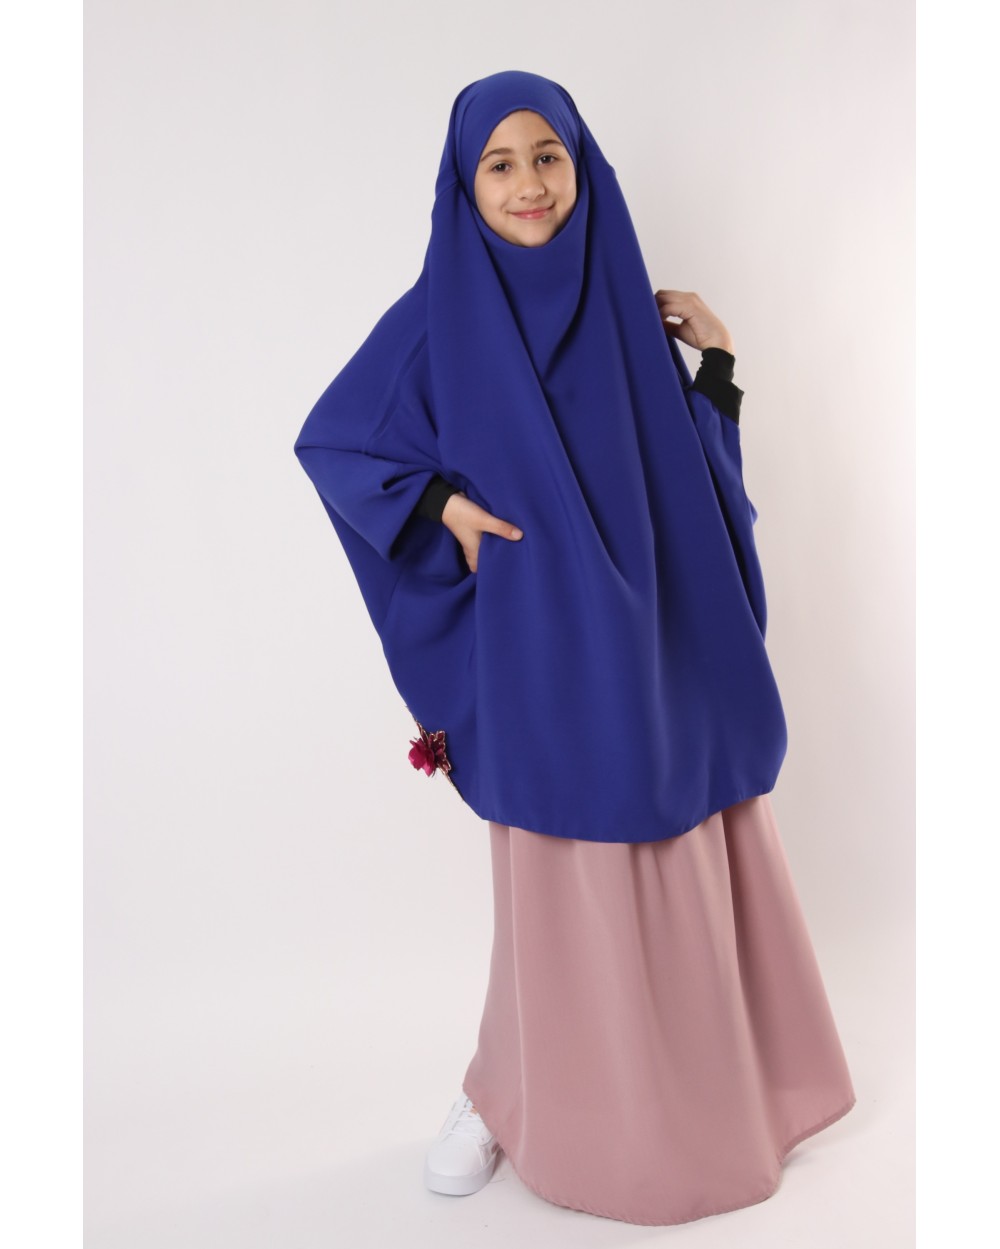 Jilbab child with skirt Mayssane